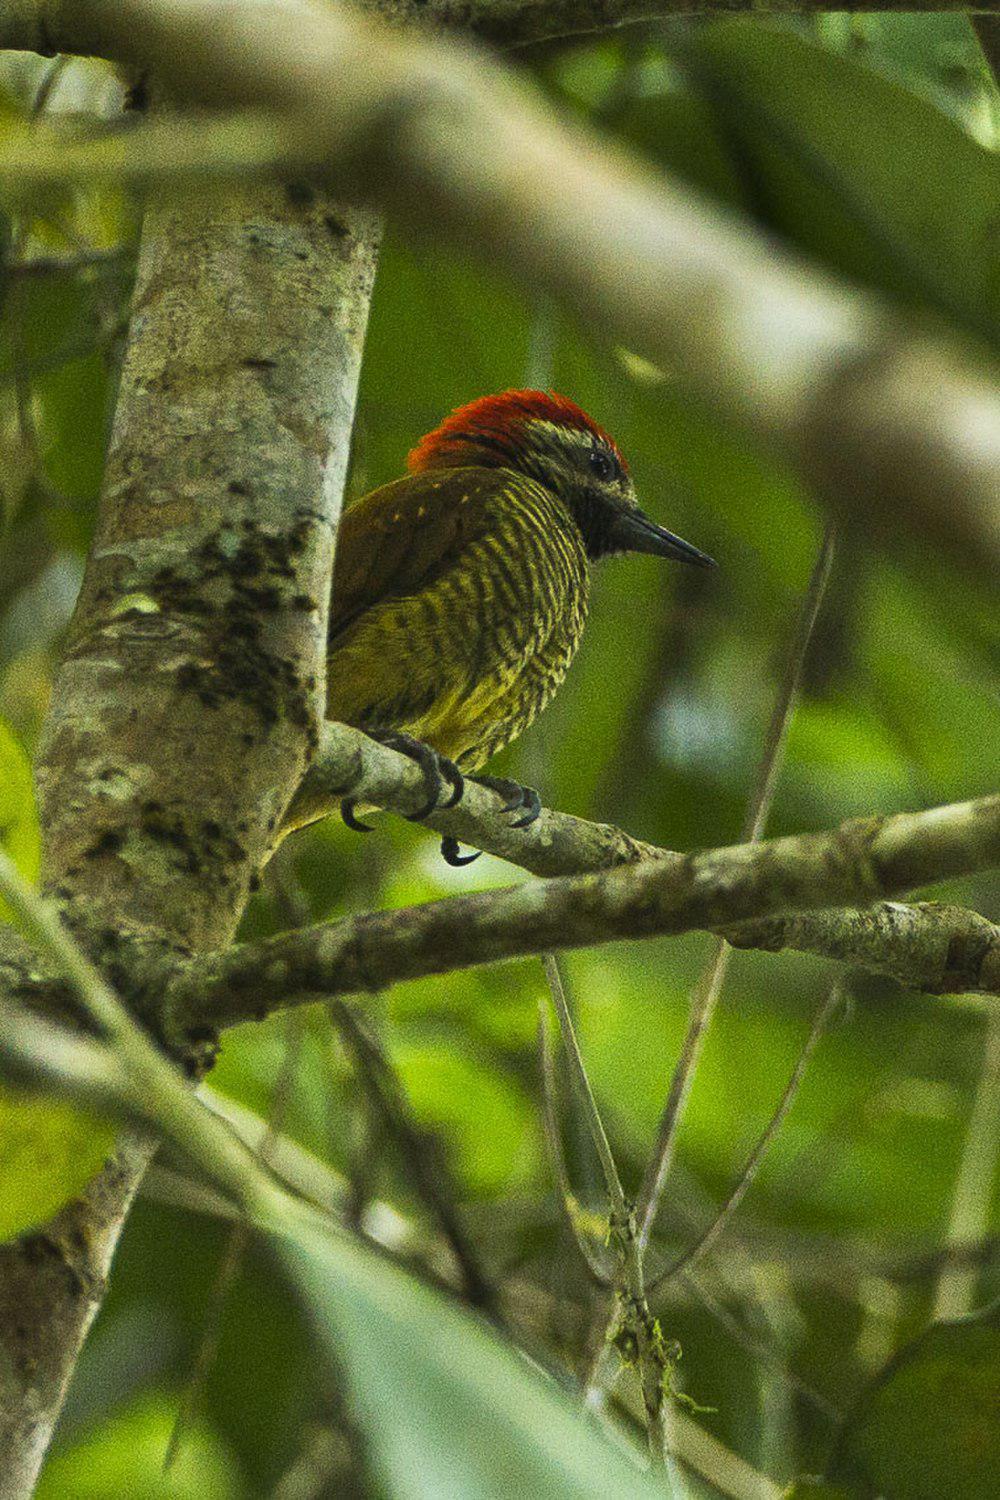 黄臀啄木鸟 / Yellow-vented Woodpecker / Veniliornis dignus